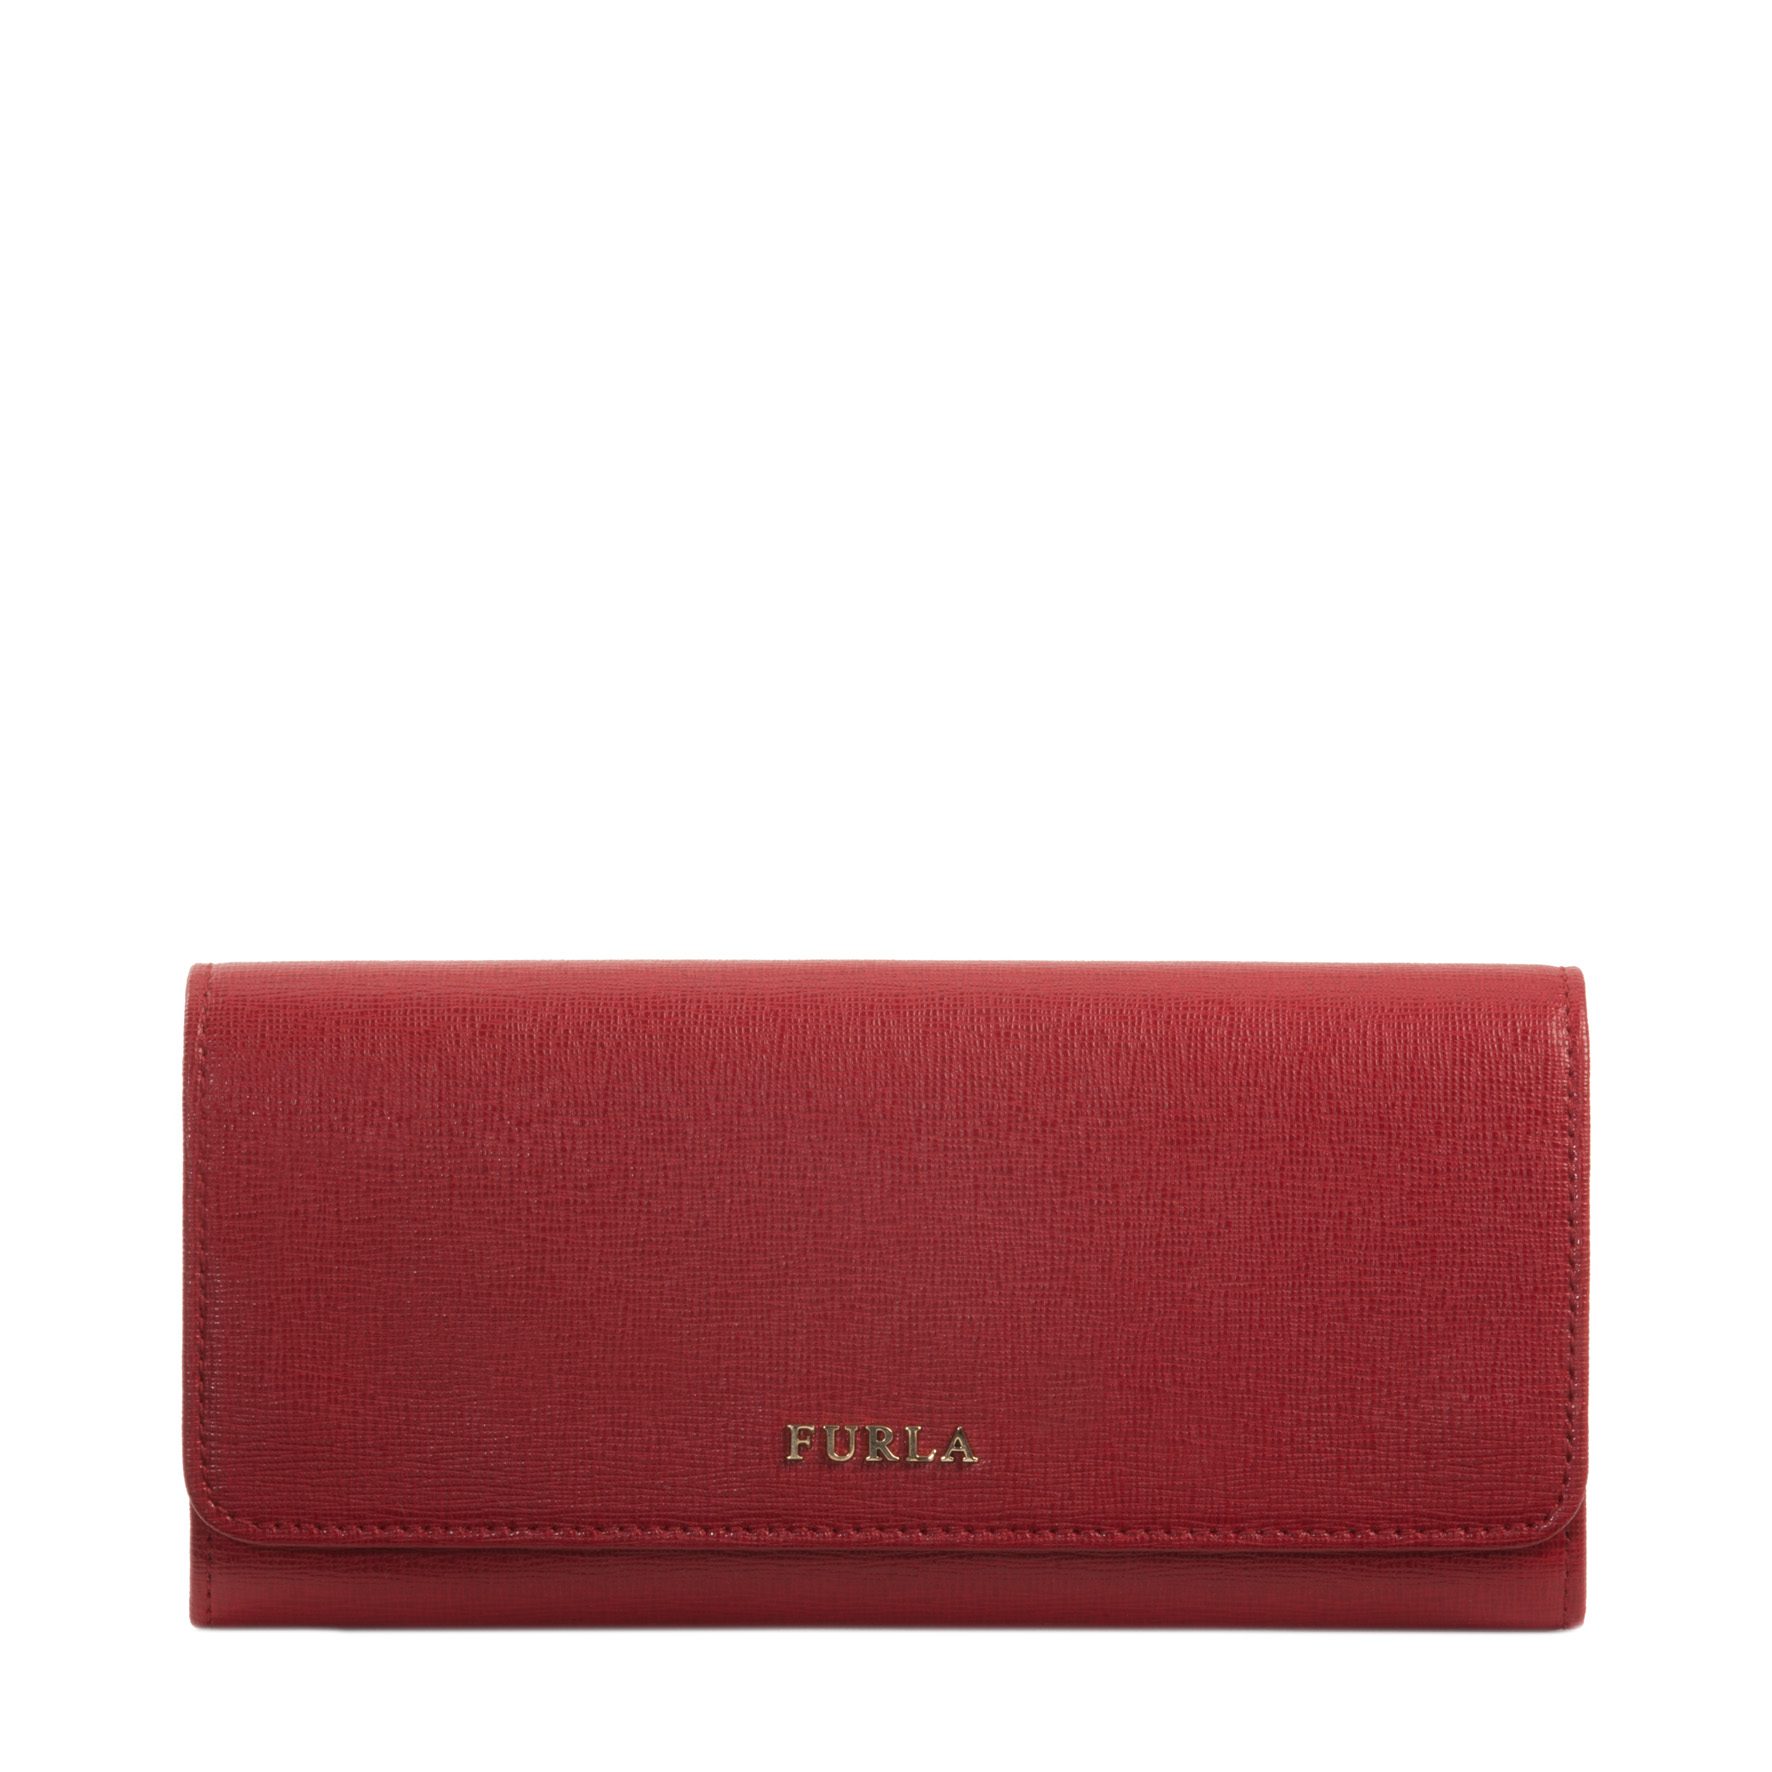 Furla Babylon Wallet in Red (cabernet) | Lyst